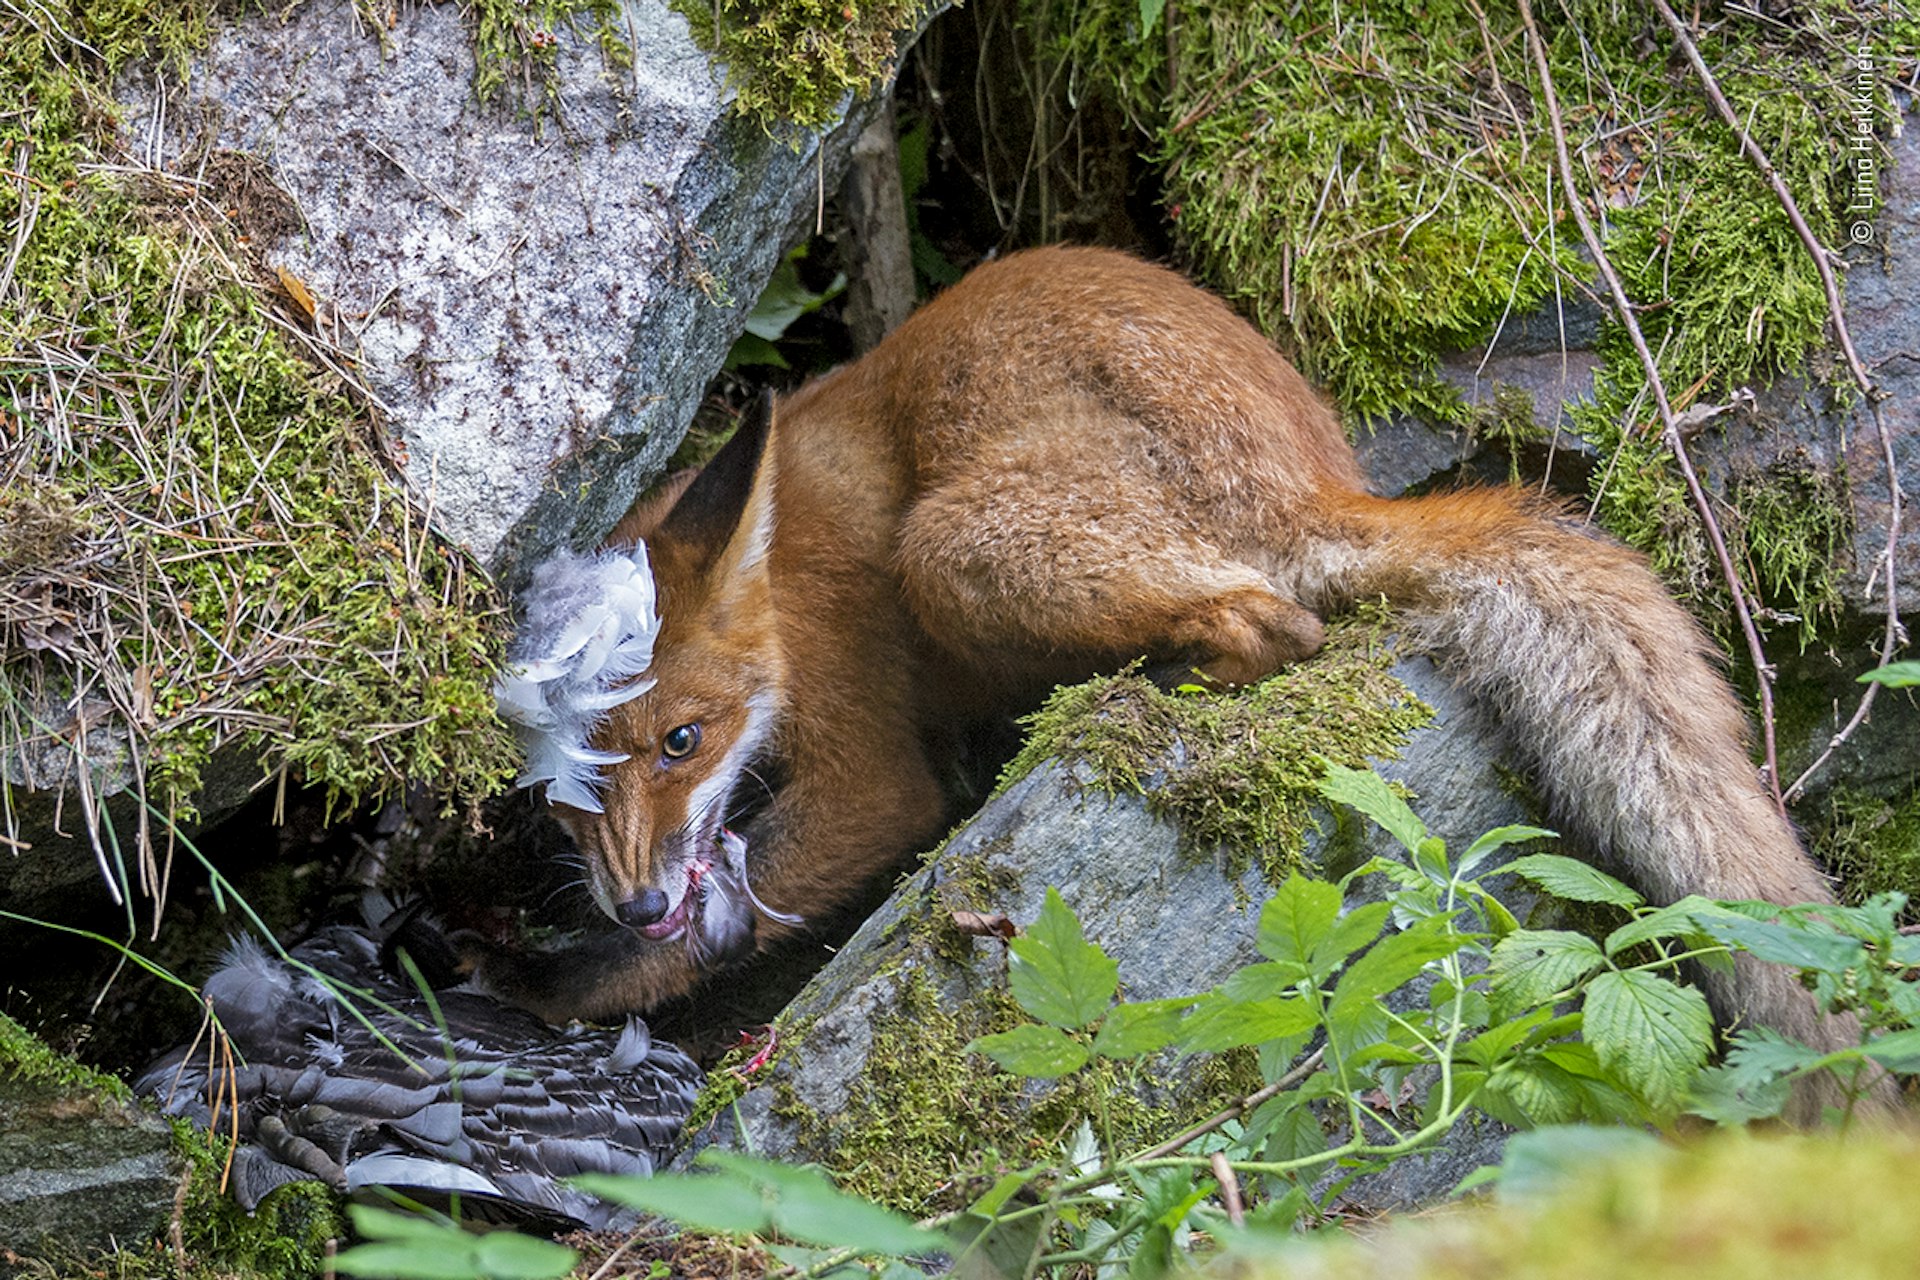 A fox cub eating a goose under a rock